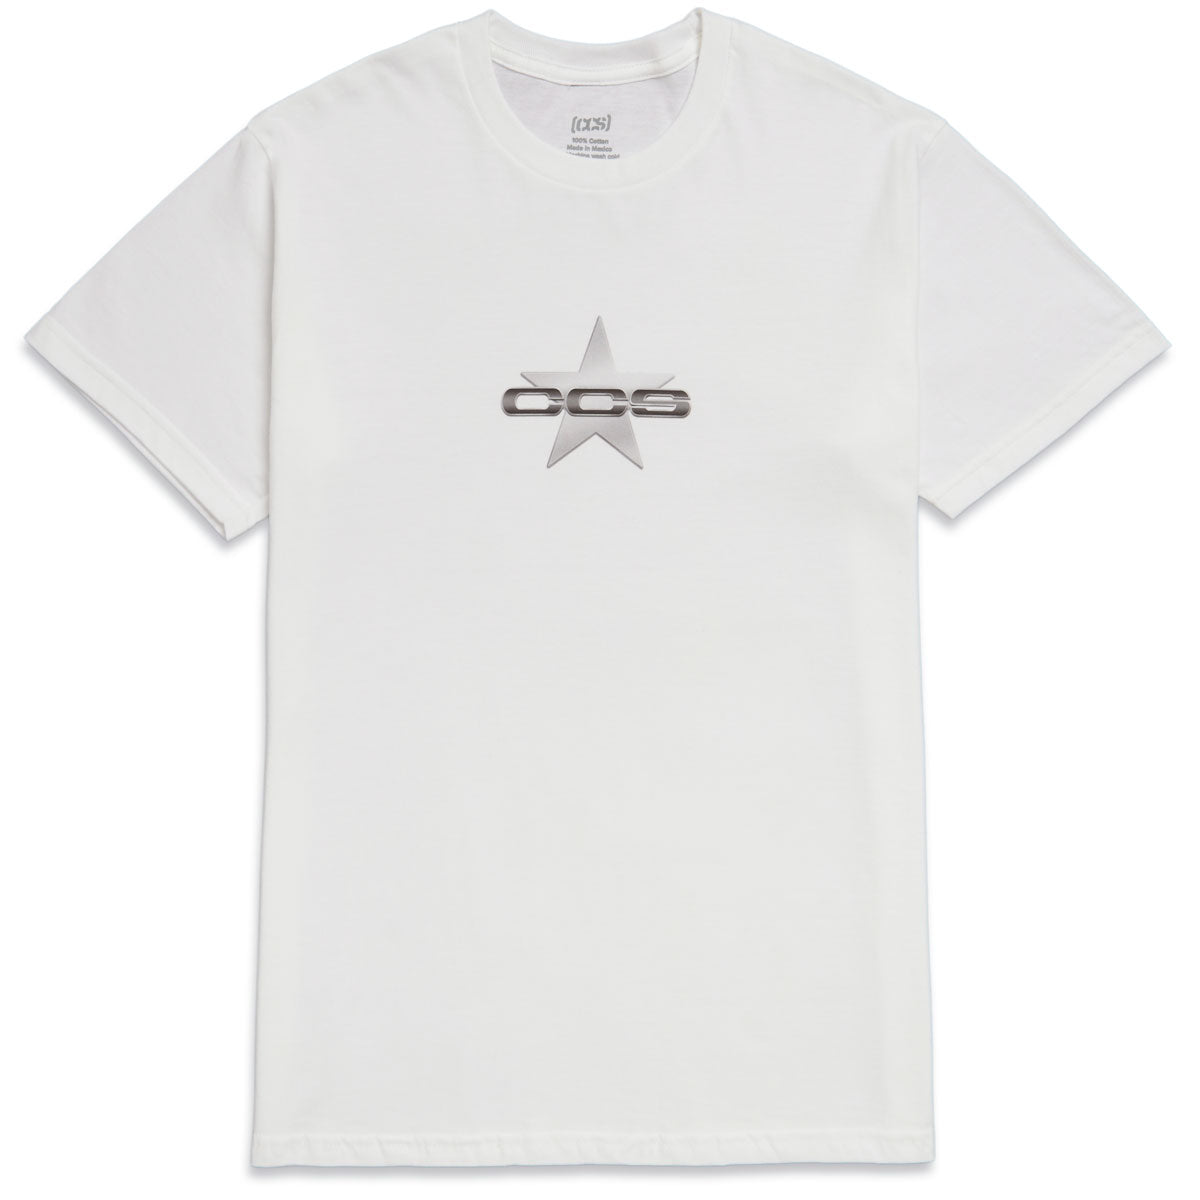 CCS 97 Star T-Shirt image 1